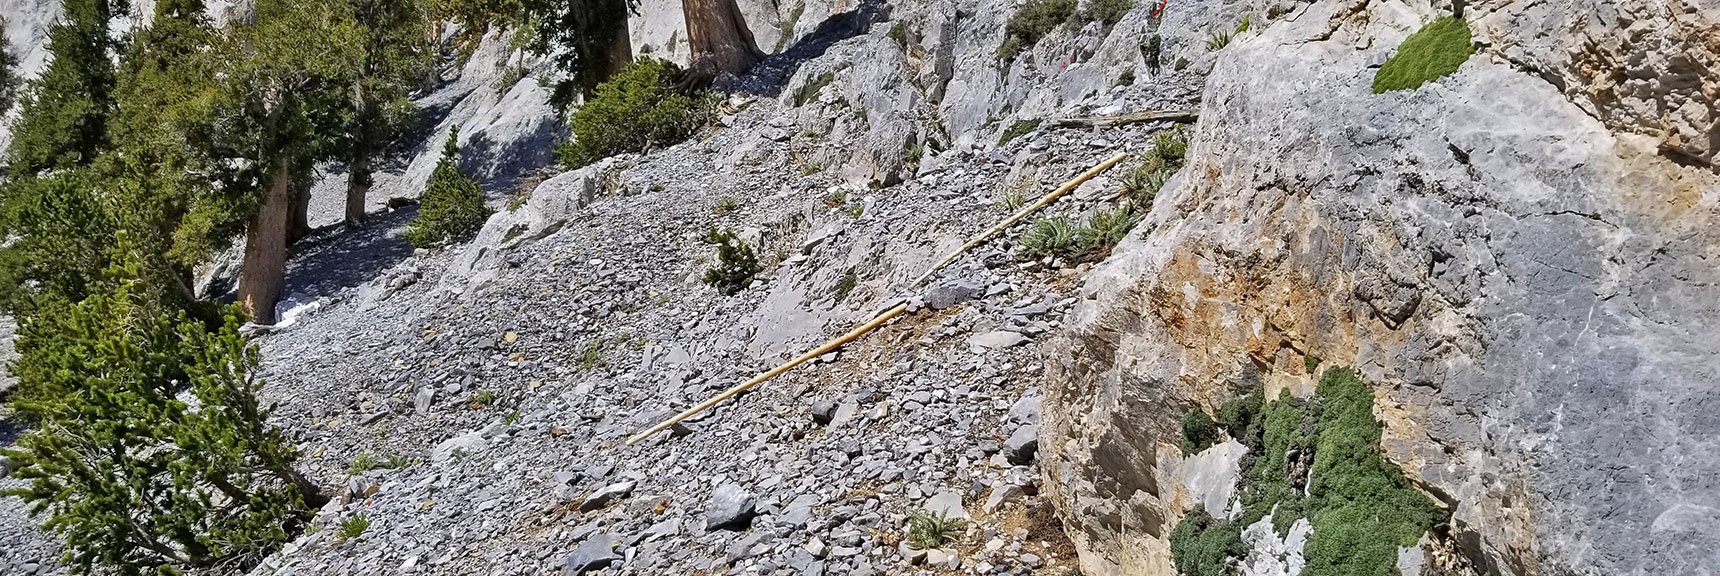 Hiking Poles Retrieved from Last Week's Adventure | Mummy Mountain Northeast Approach Wilderness Navigation, Nevada